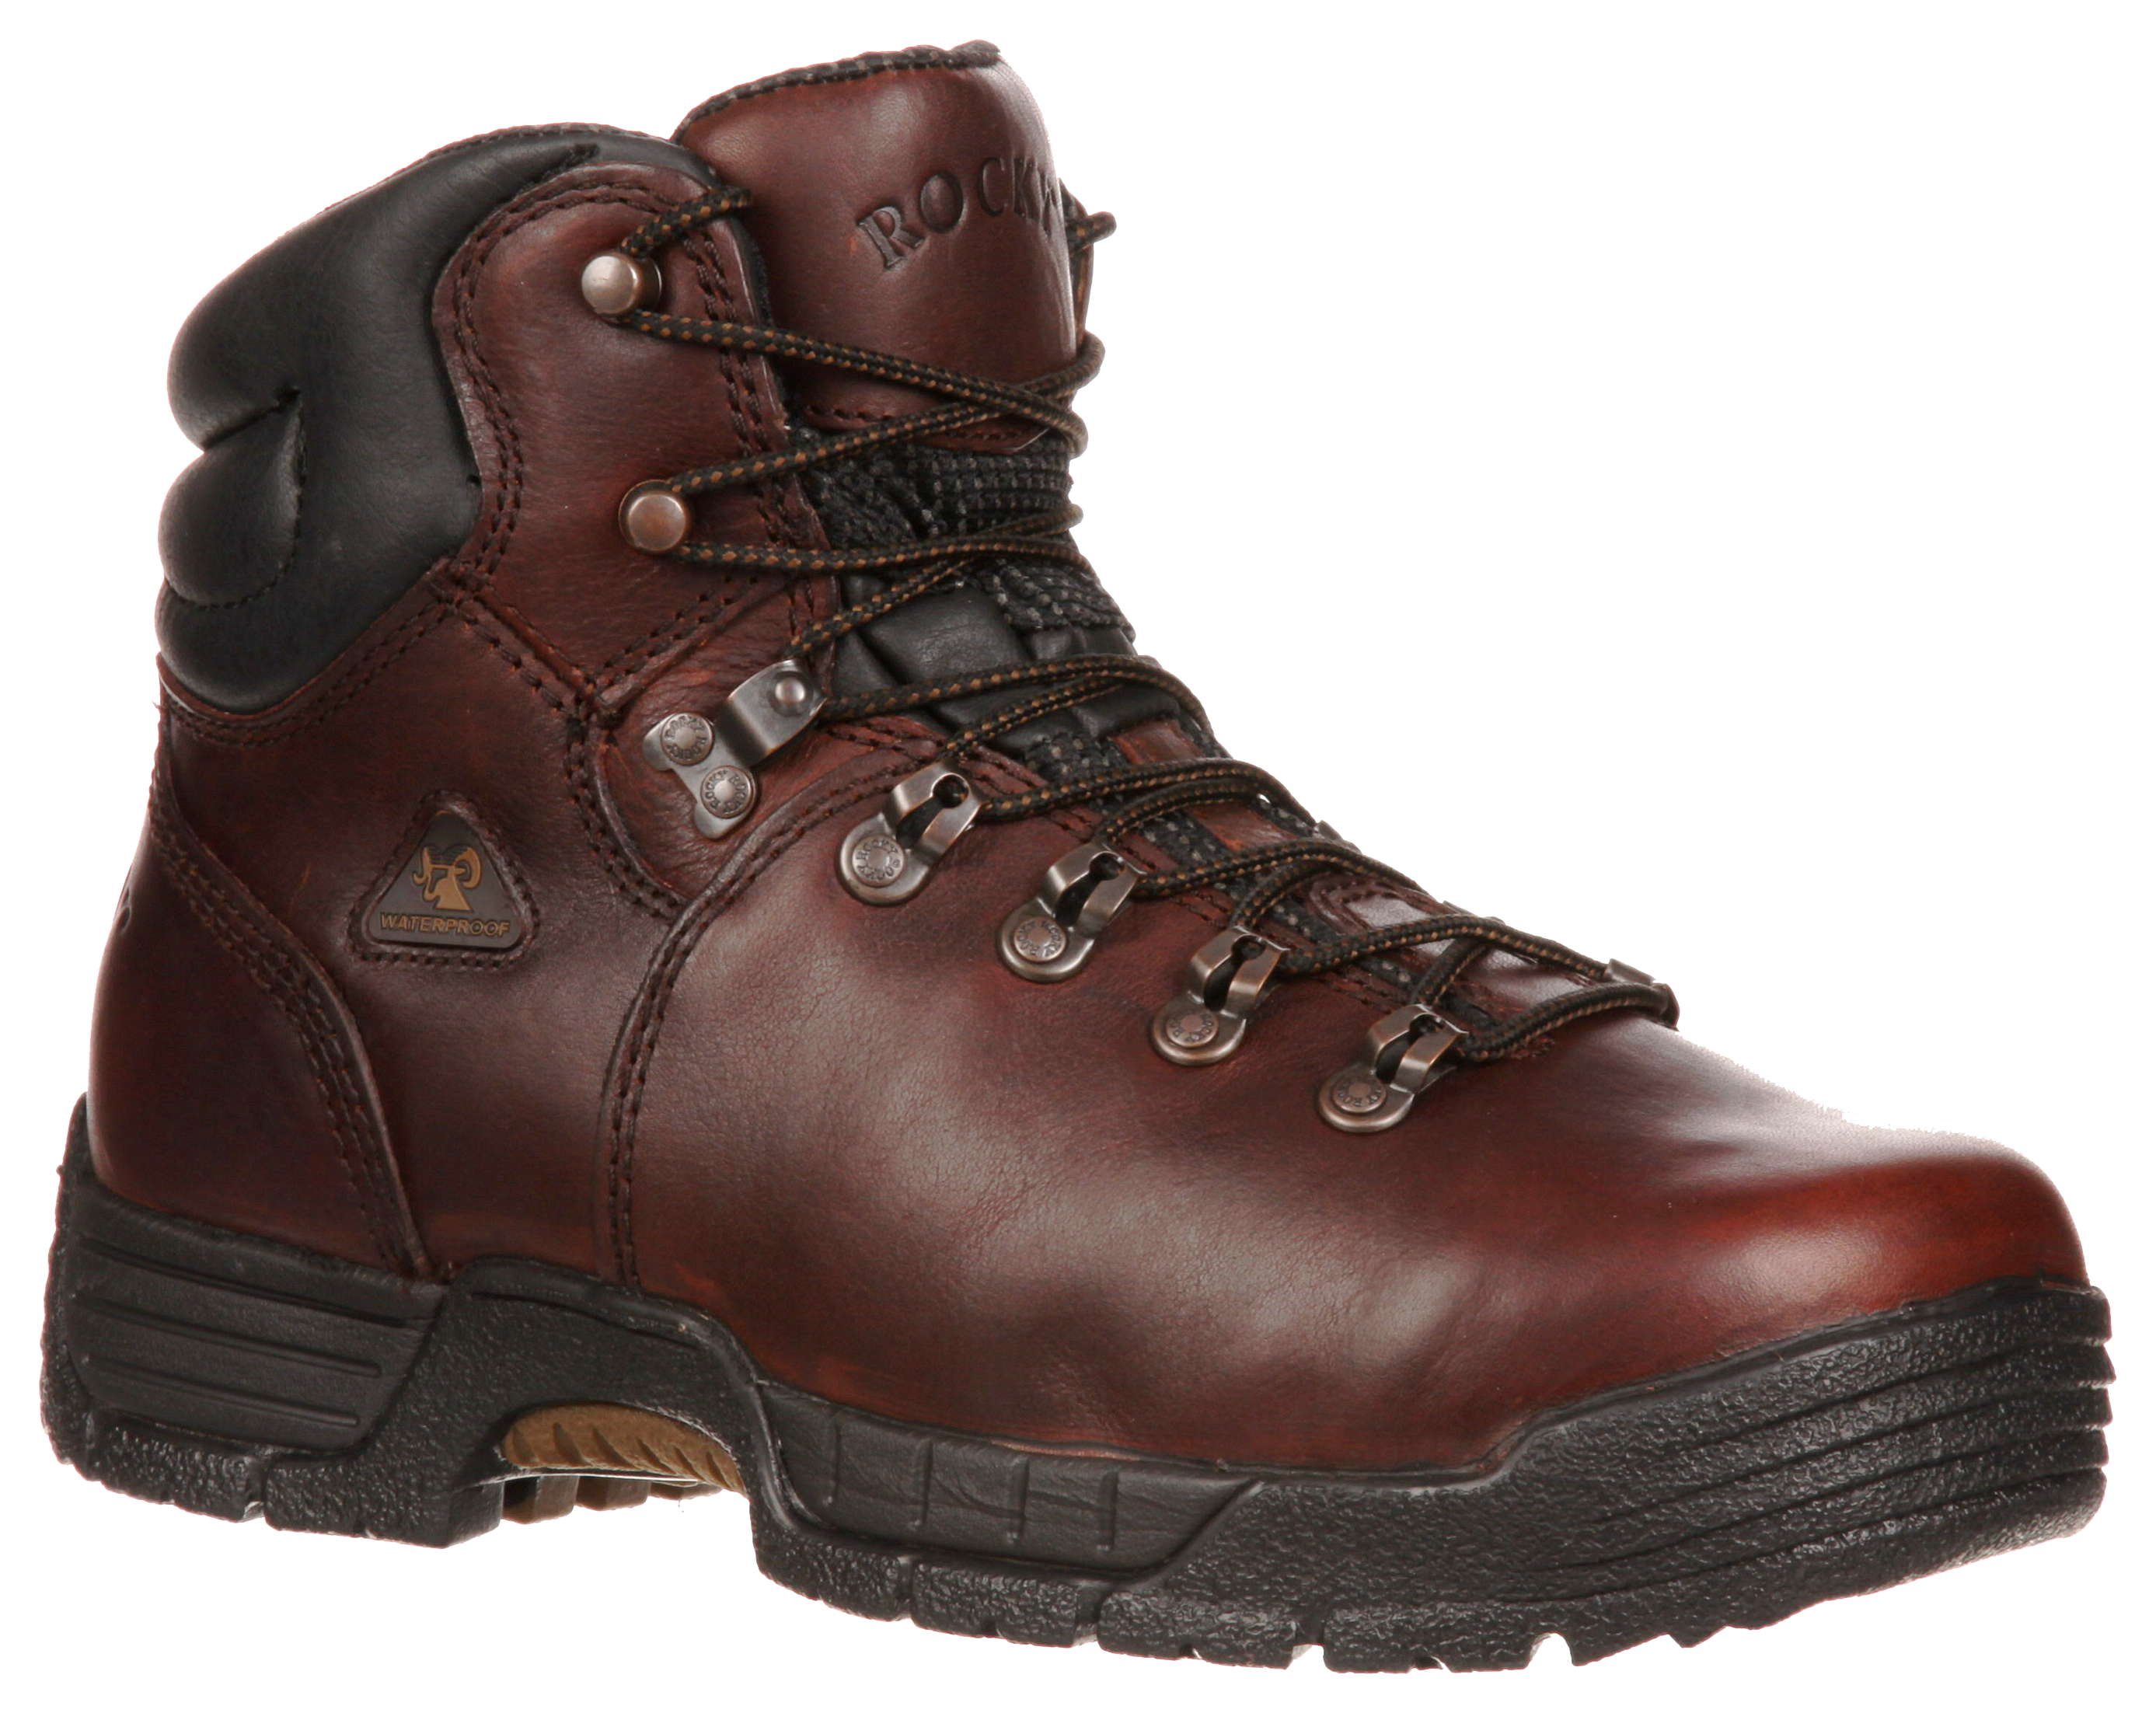 ROCKY MobiLite Waterproof Steel Toe Work Boots for Men - Brown - 10.5 M